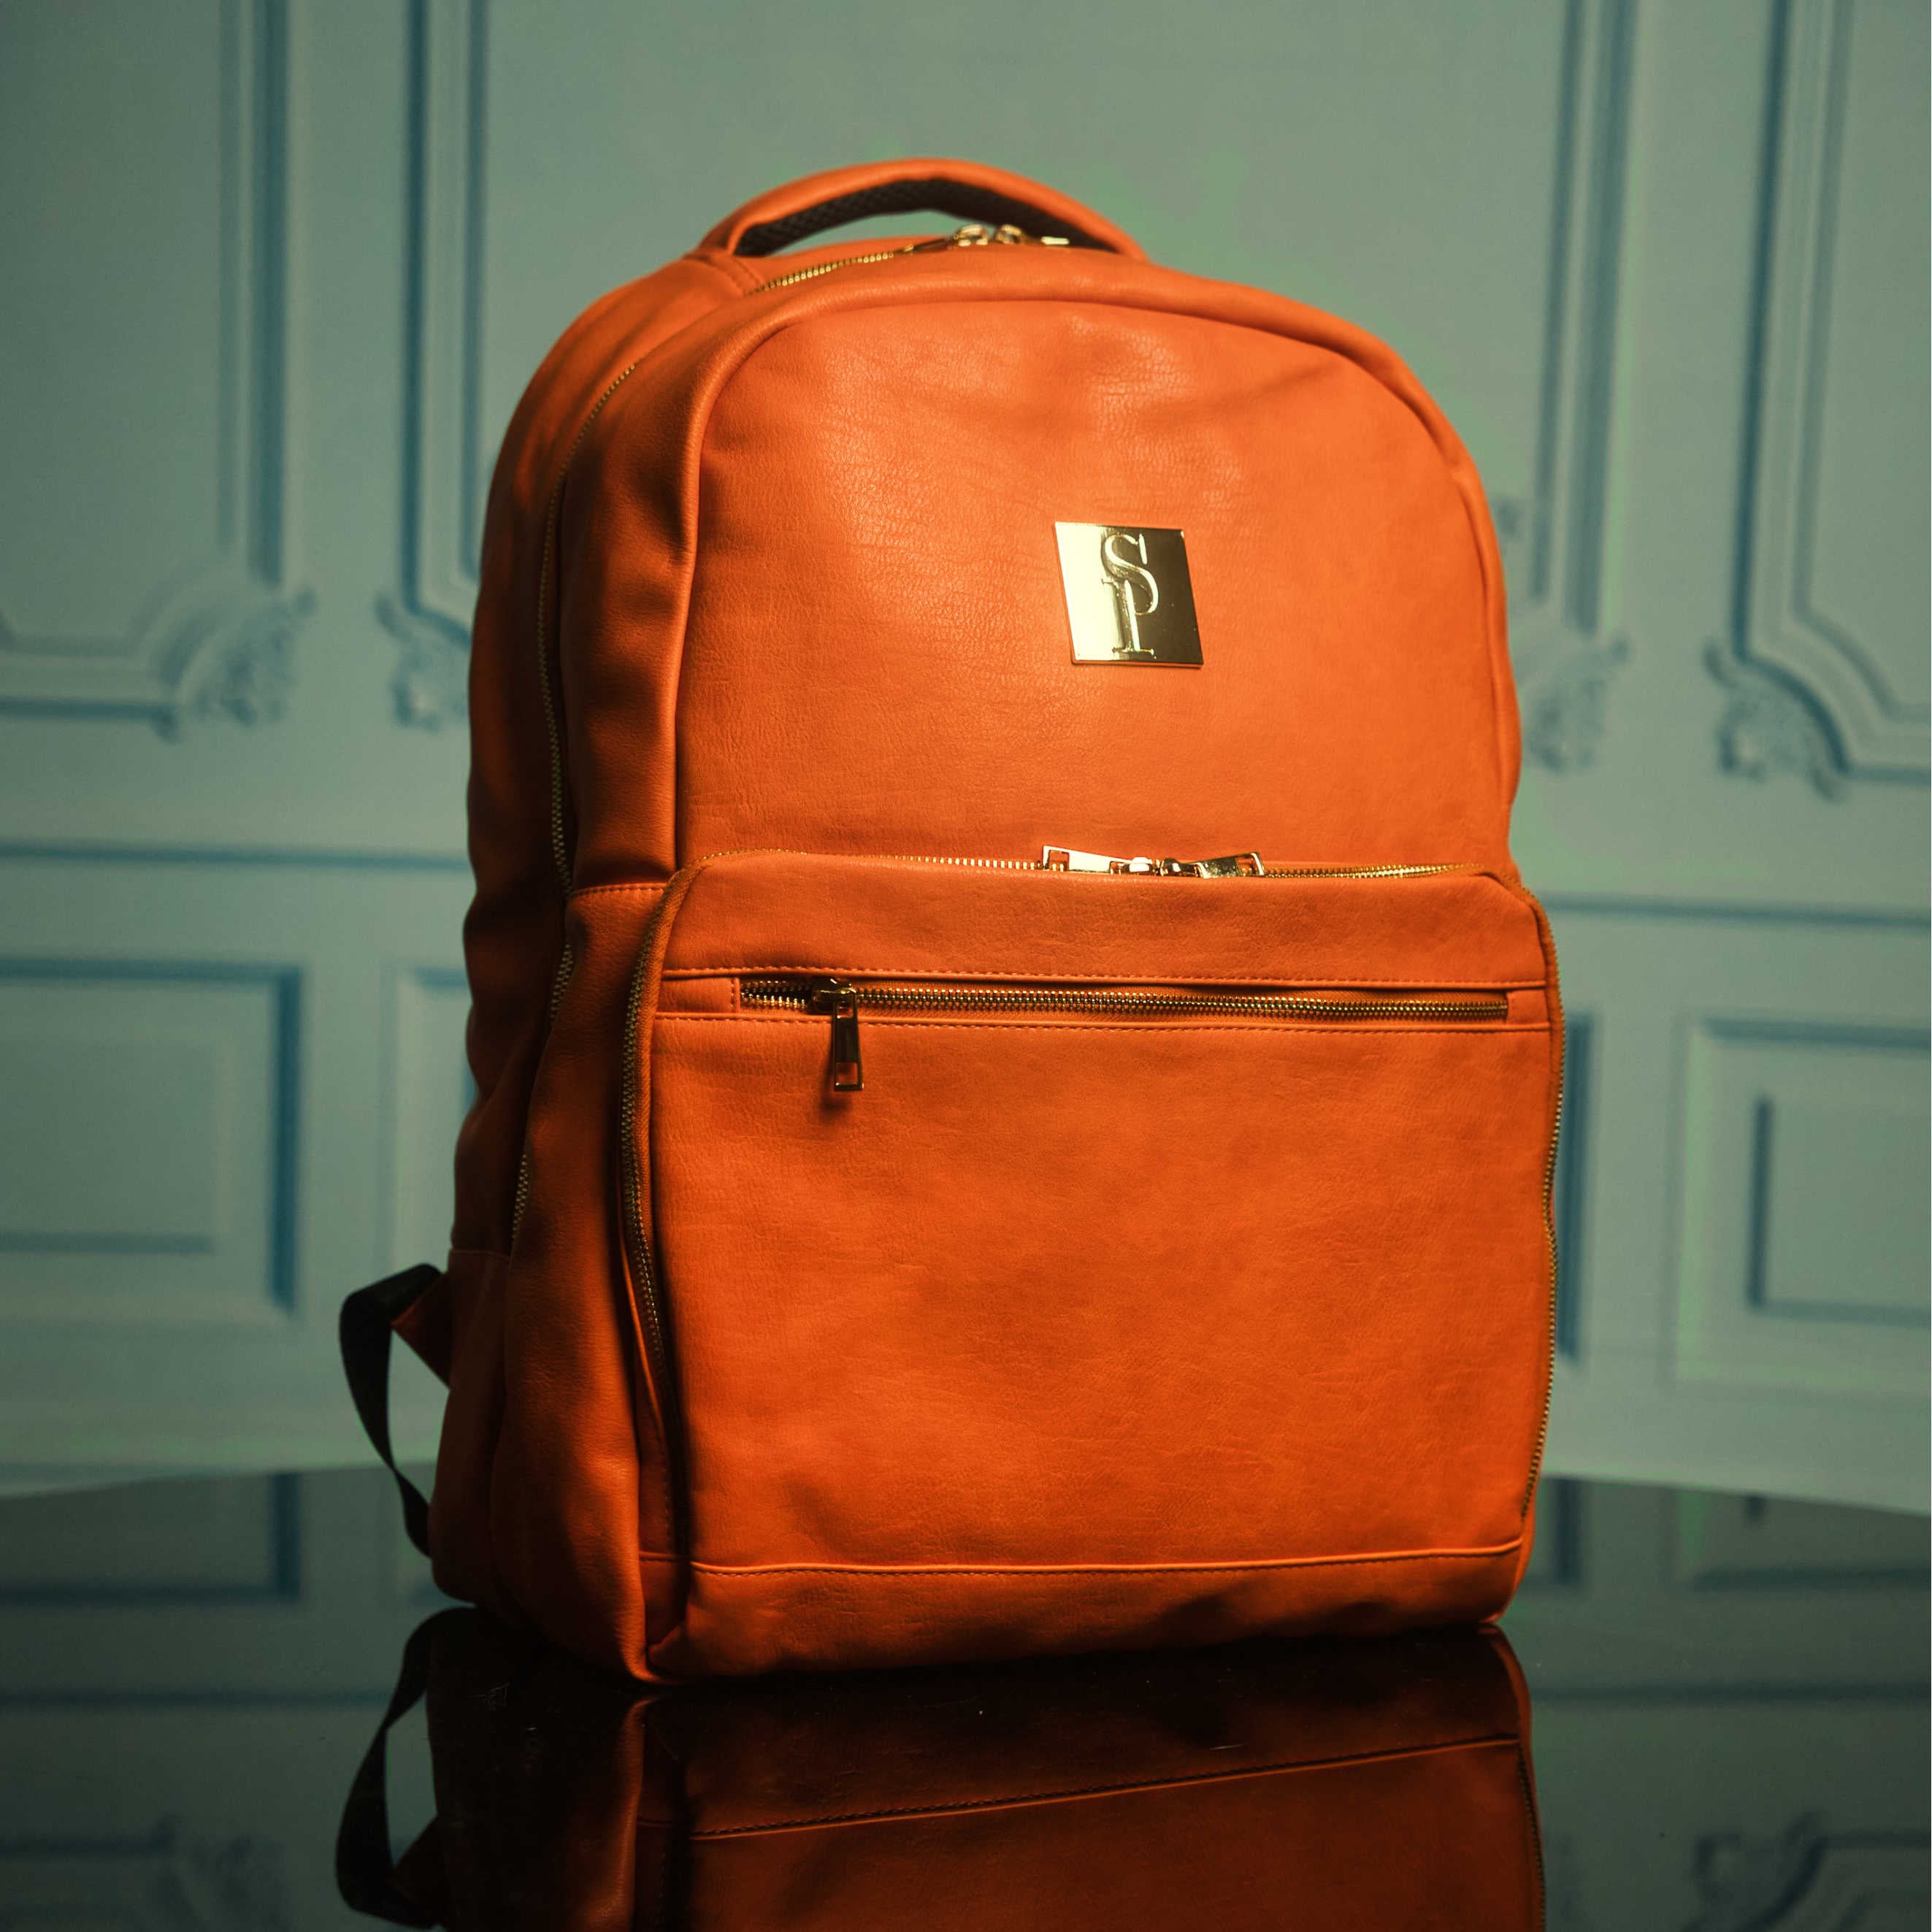 Orange Tumbled Leather 2 Bag Set (Commuter and Duffle) - Sole Premise